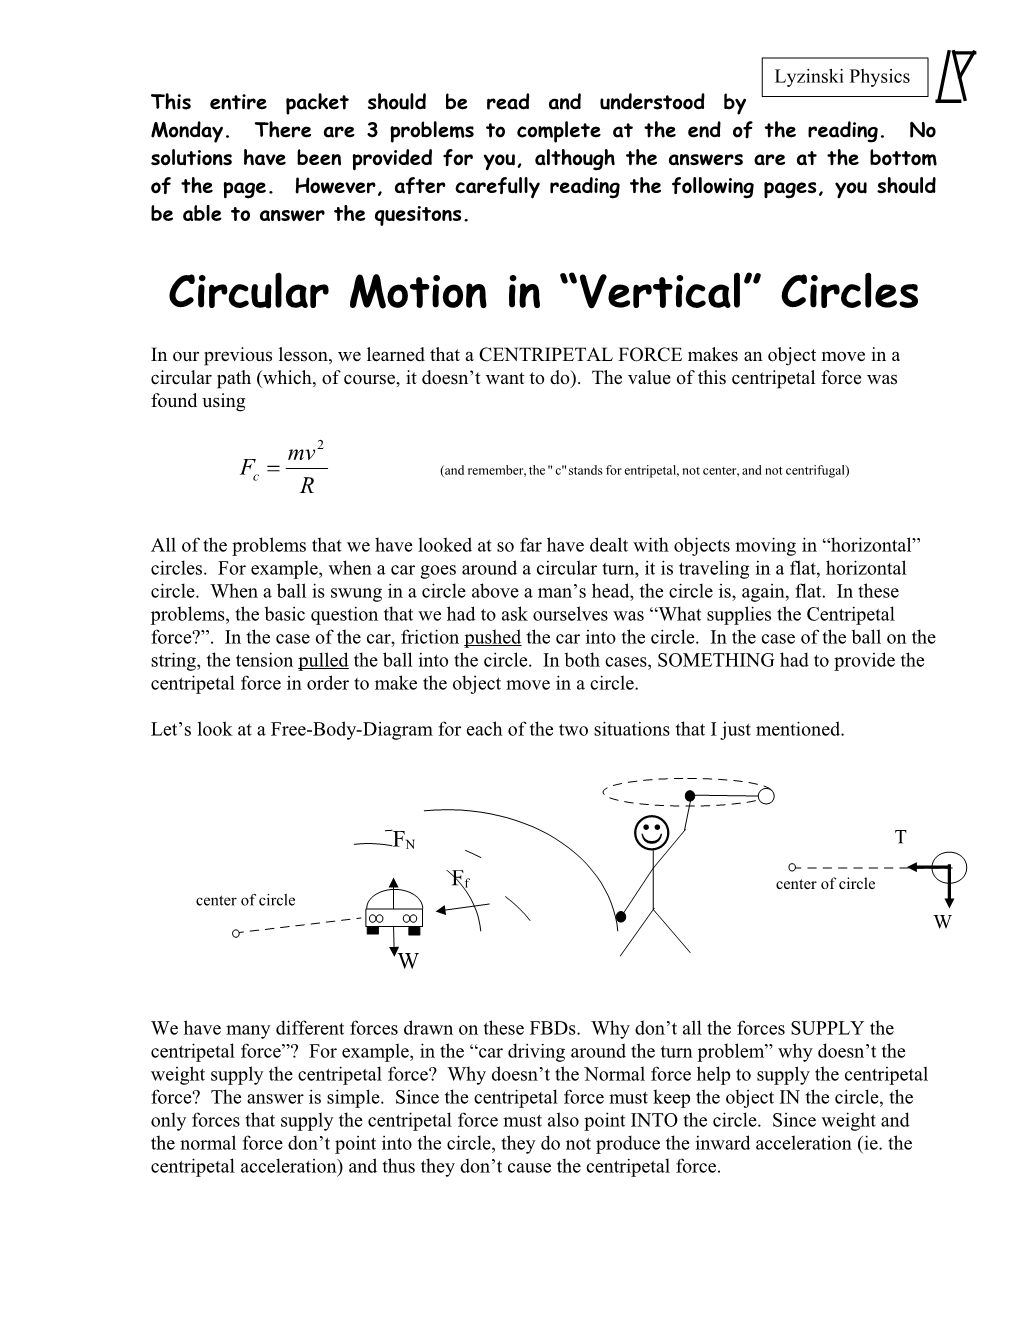 Circular Motion in Vertical Circles